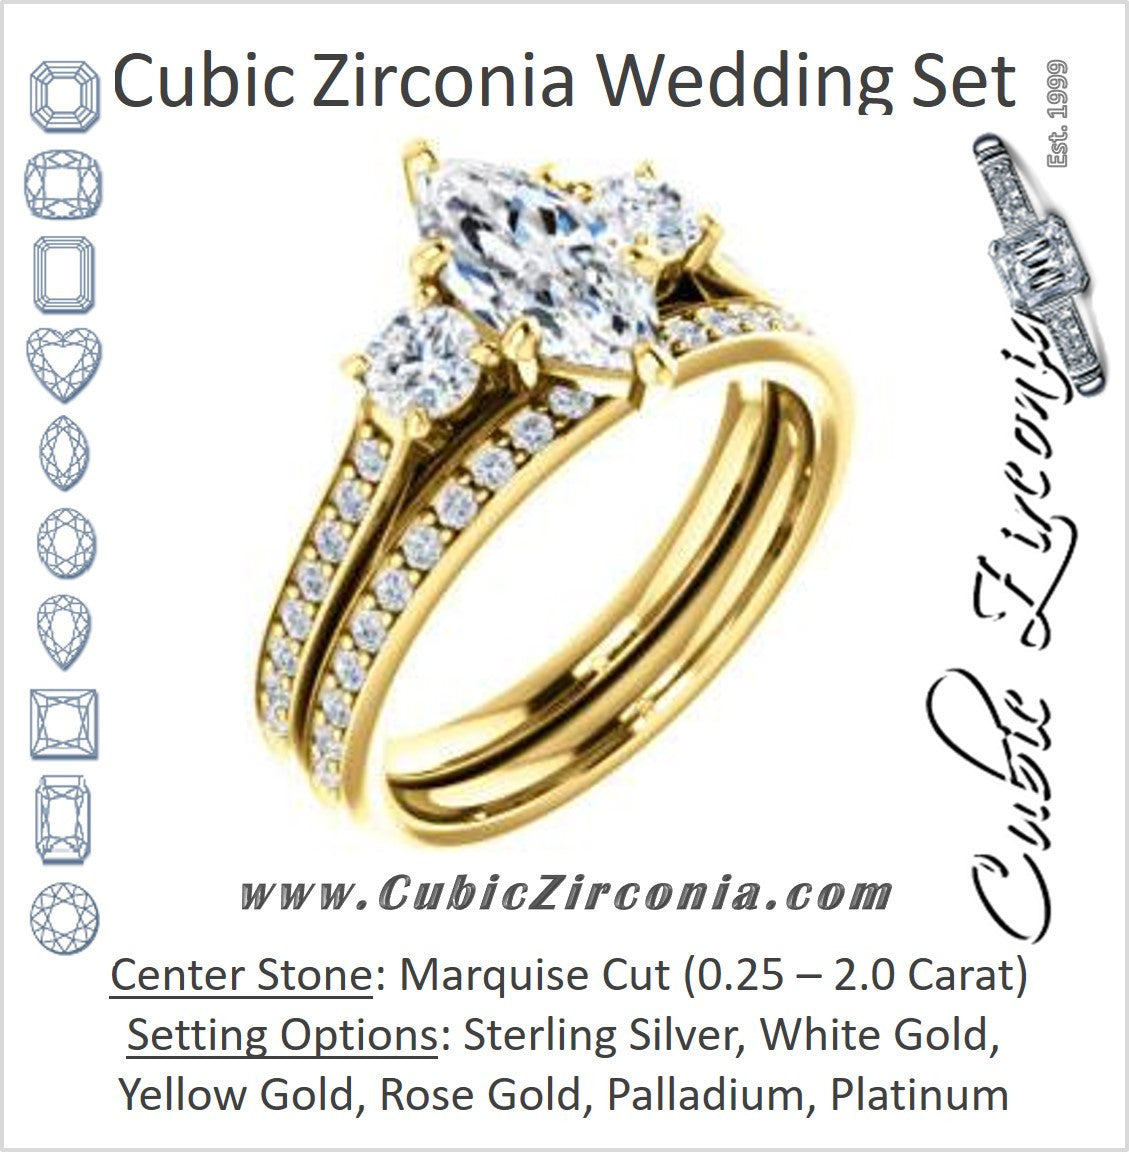 CZ Wedding Set, featuring The Tess engagement ring (Customizable Marquise Cut Trellis-Enhanced Bridge Setting with Semi-Pavé Band)